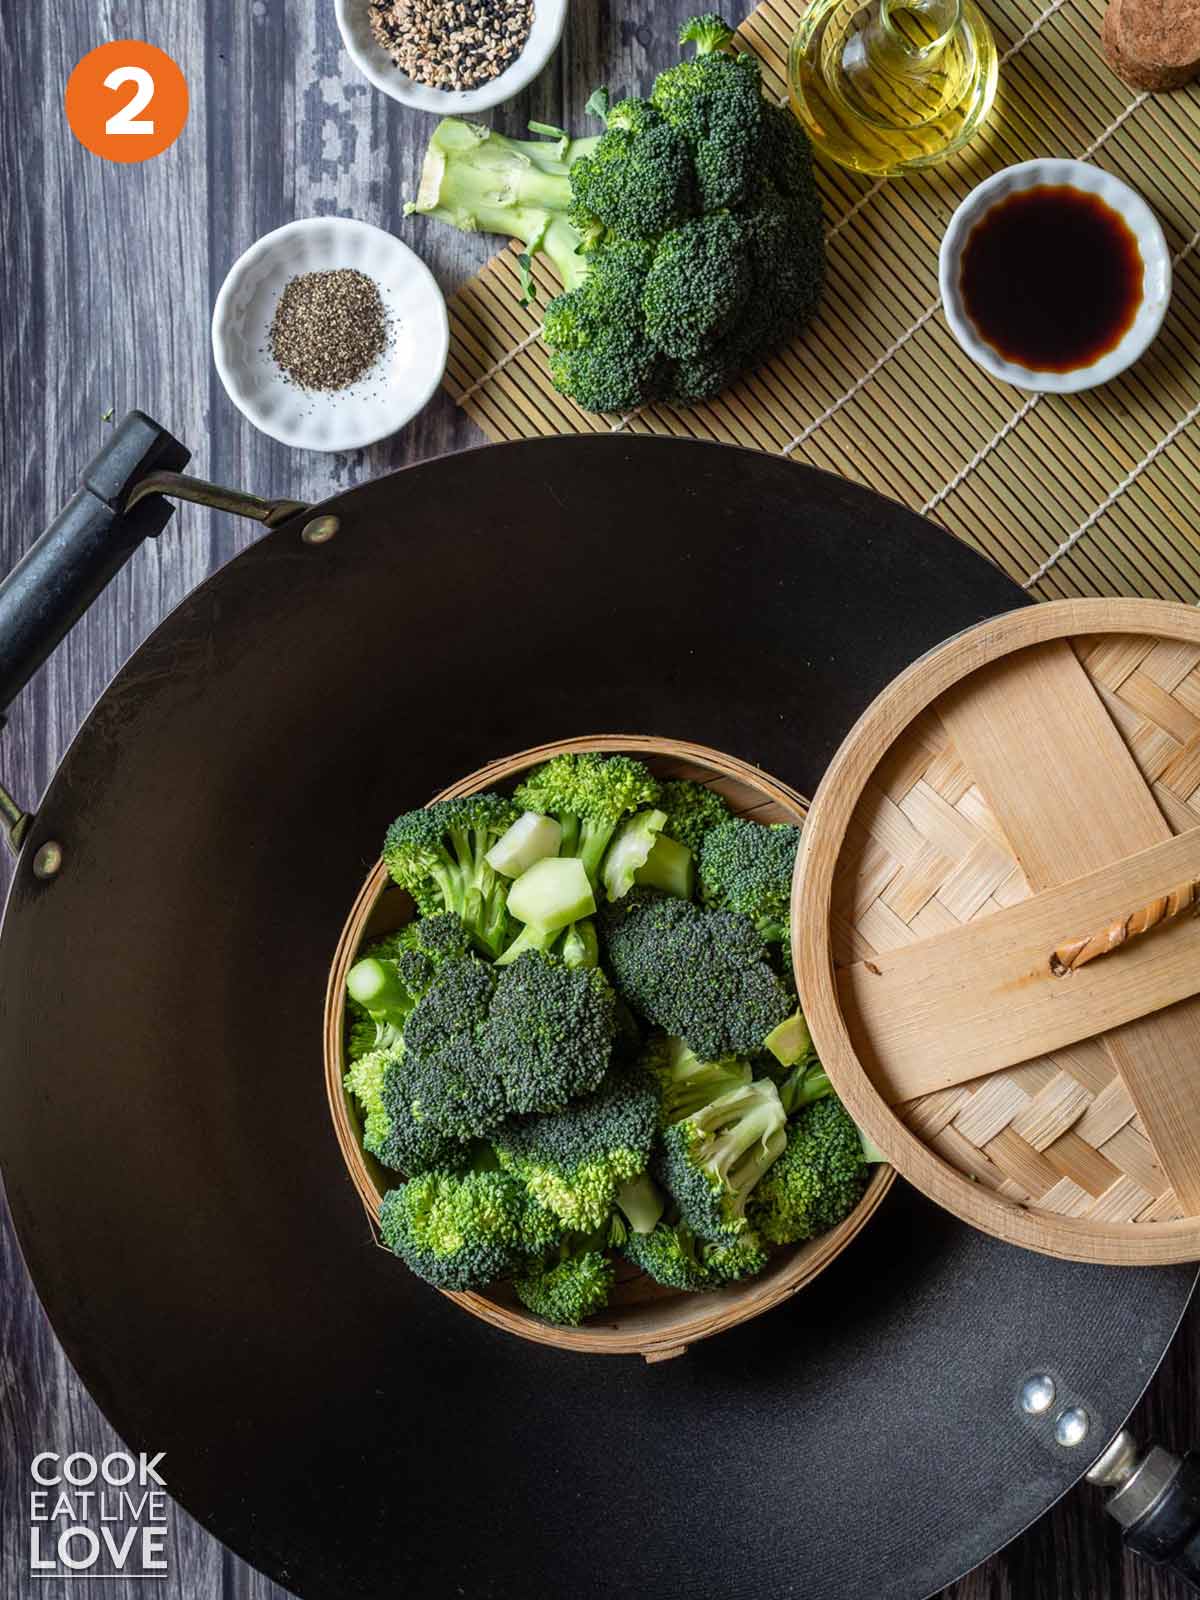 Broccoli in a steamer basket set inside a wok.